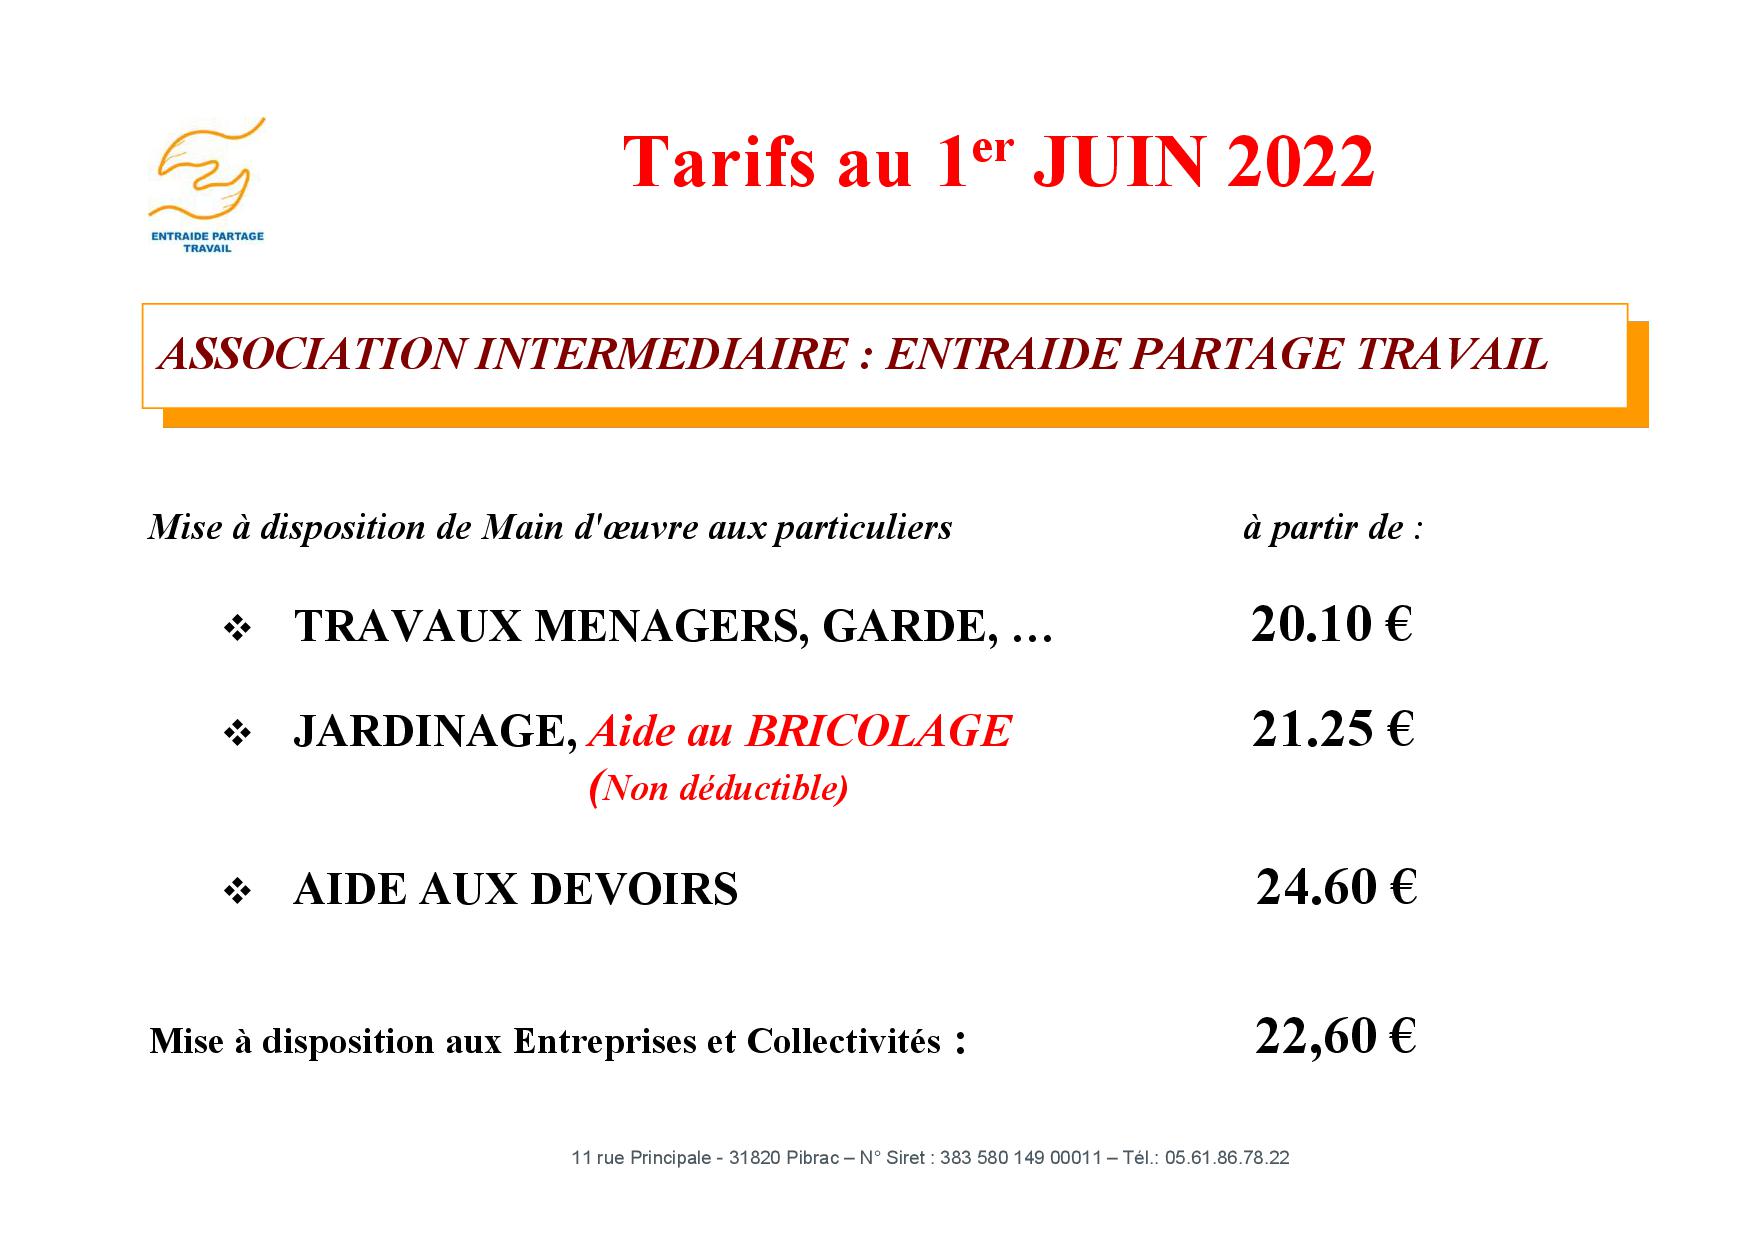 tarifs_1-6-20221.jpg